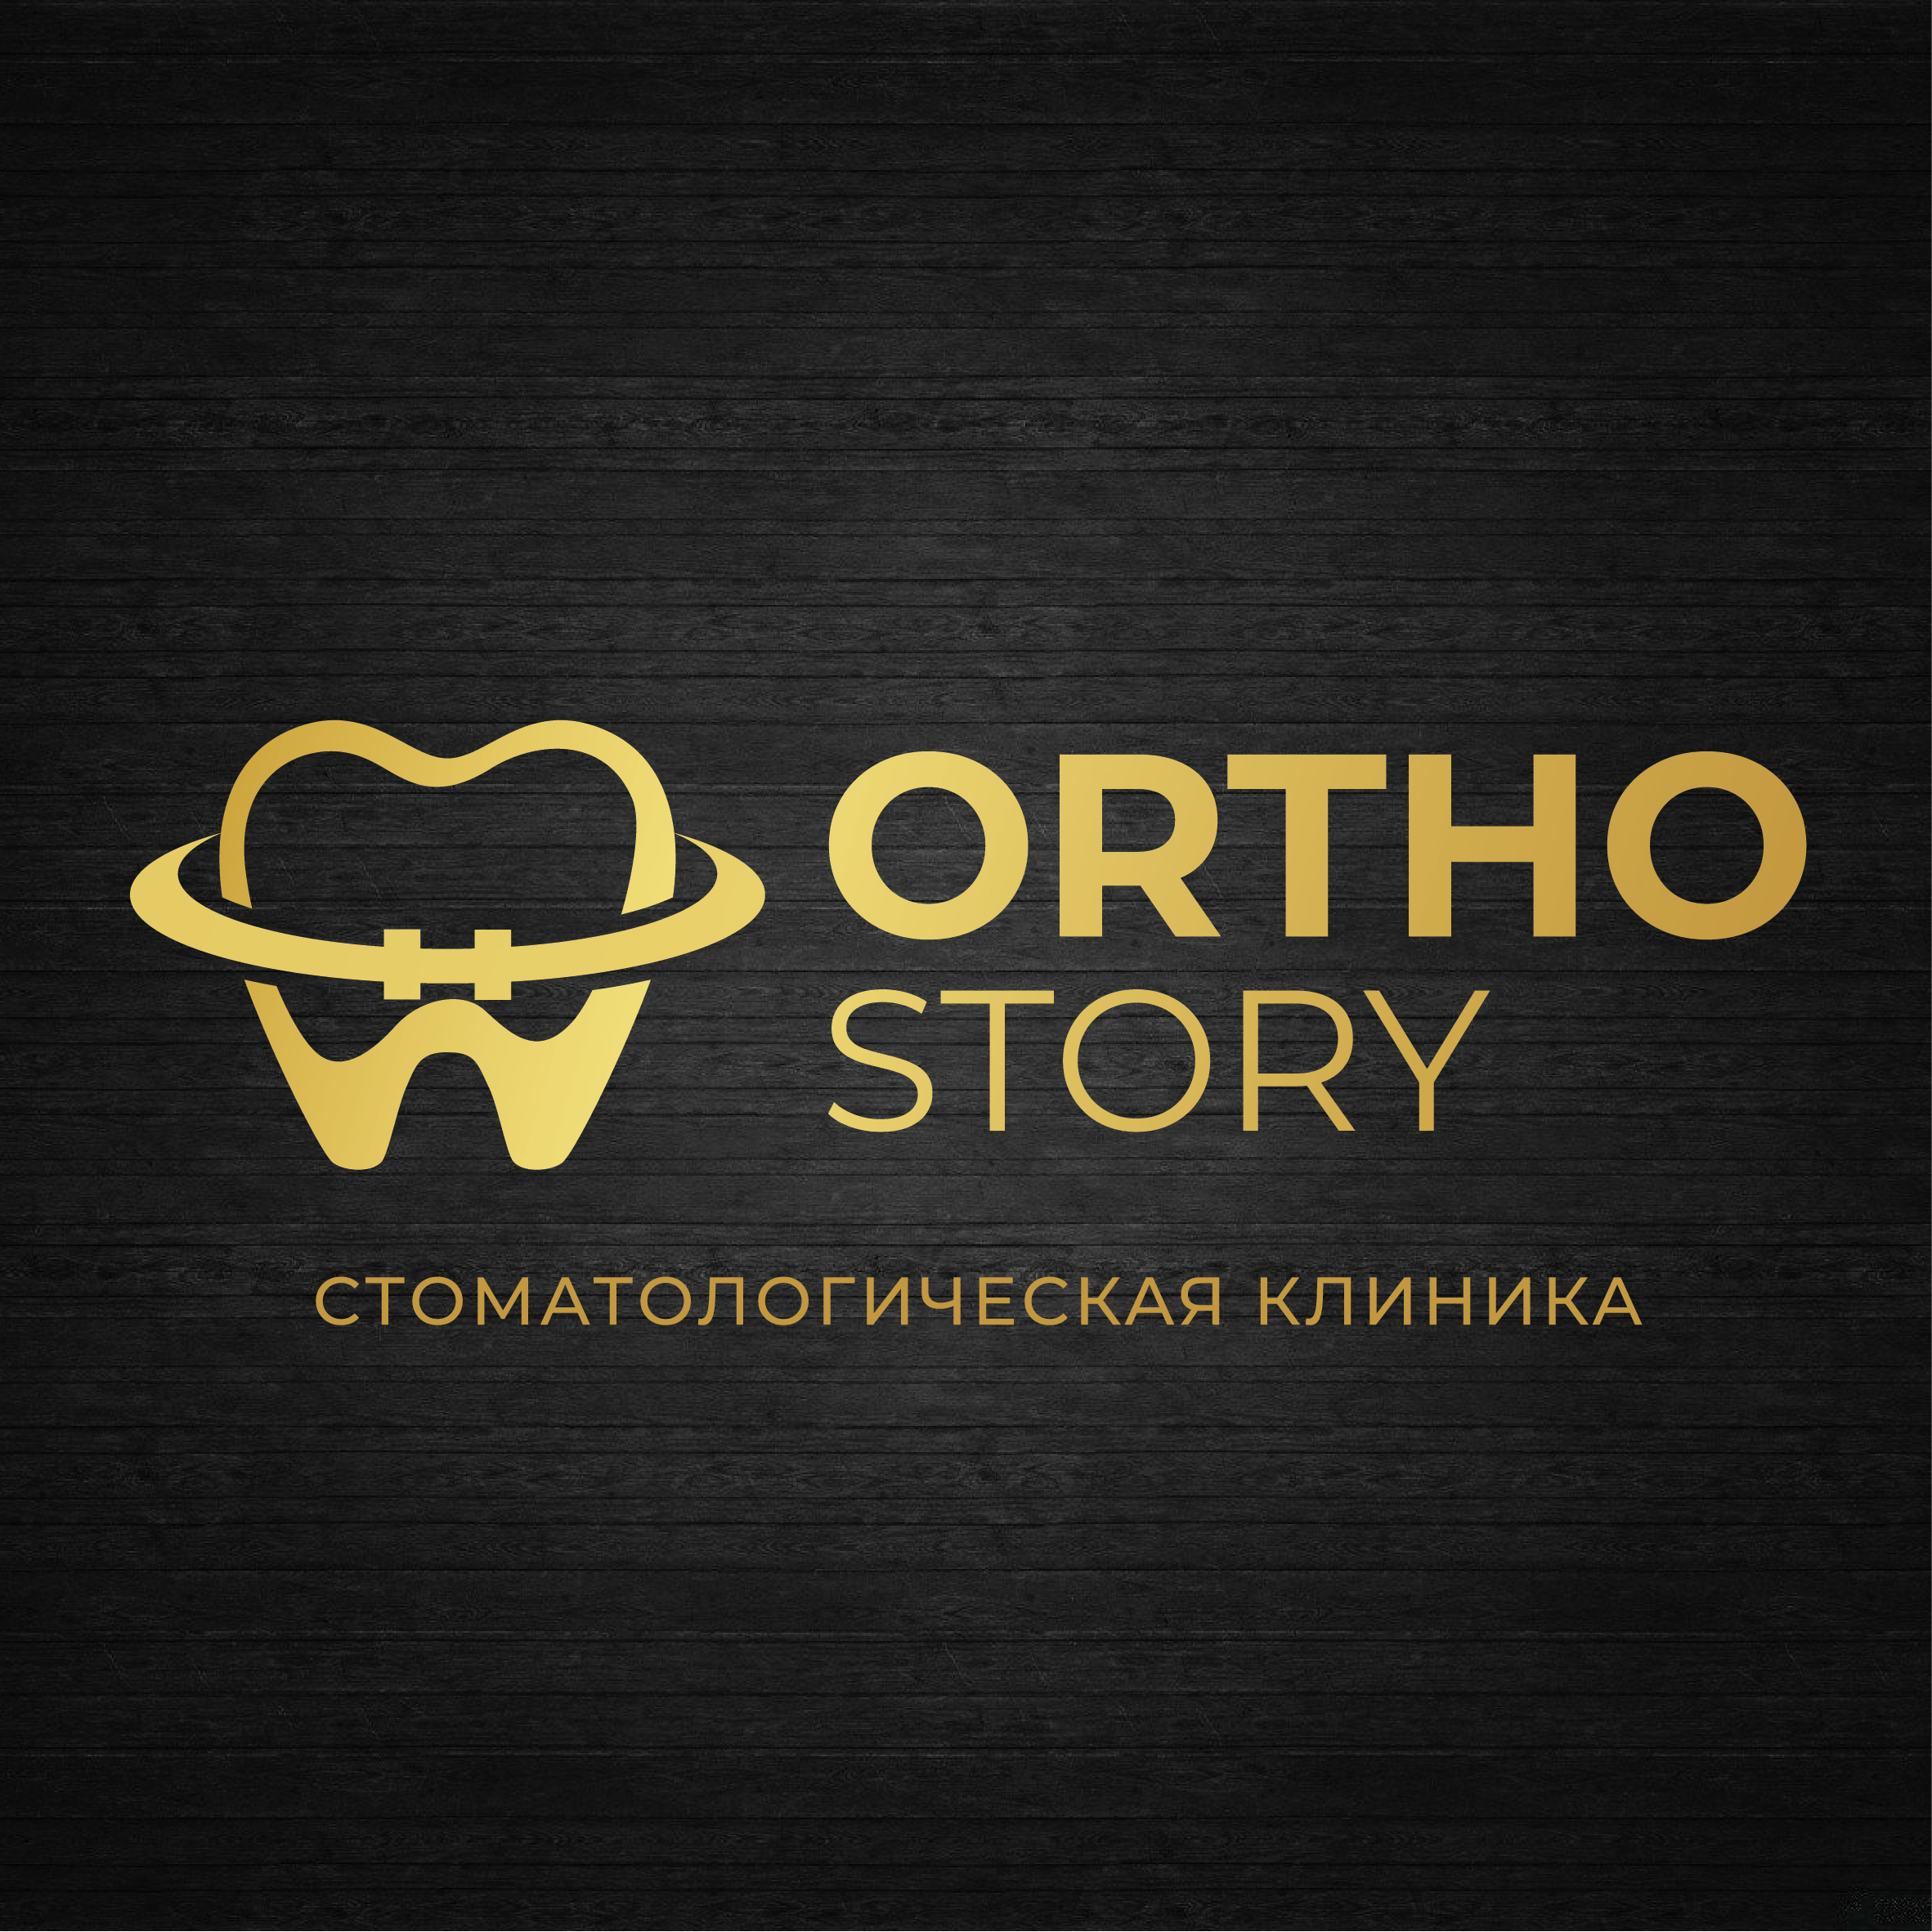 Стоматология "ORTHO STORY"